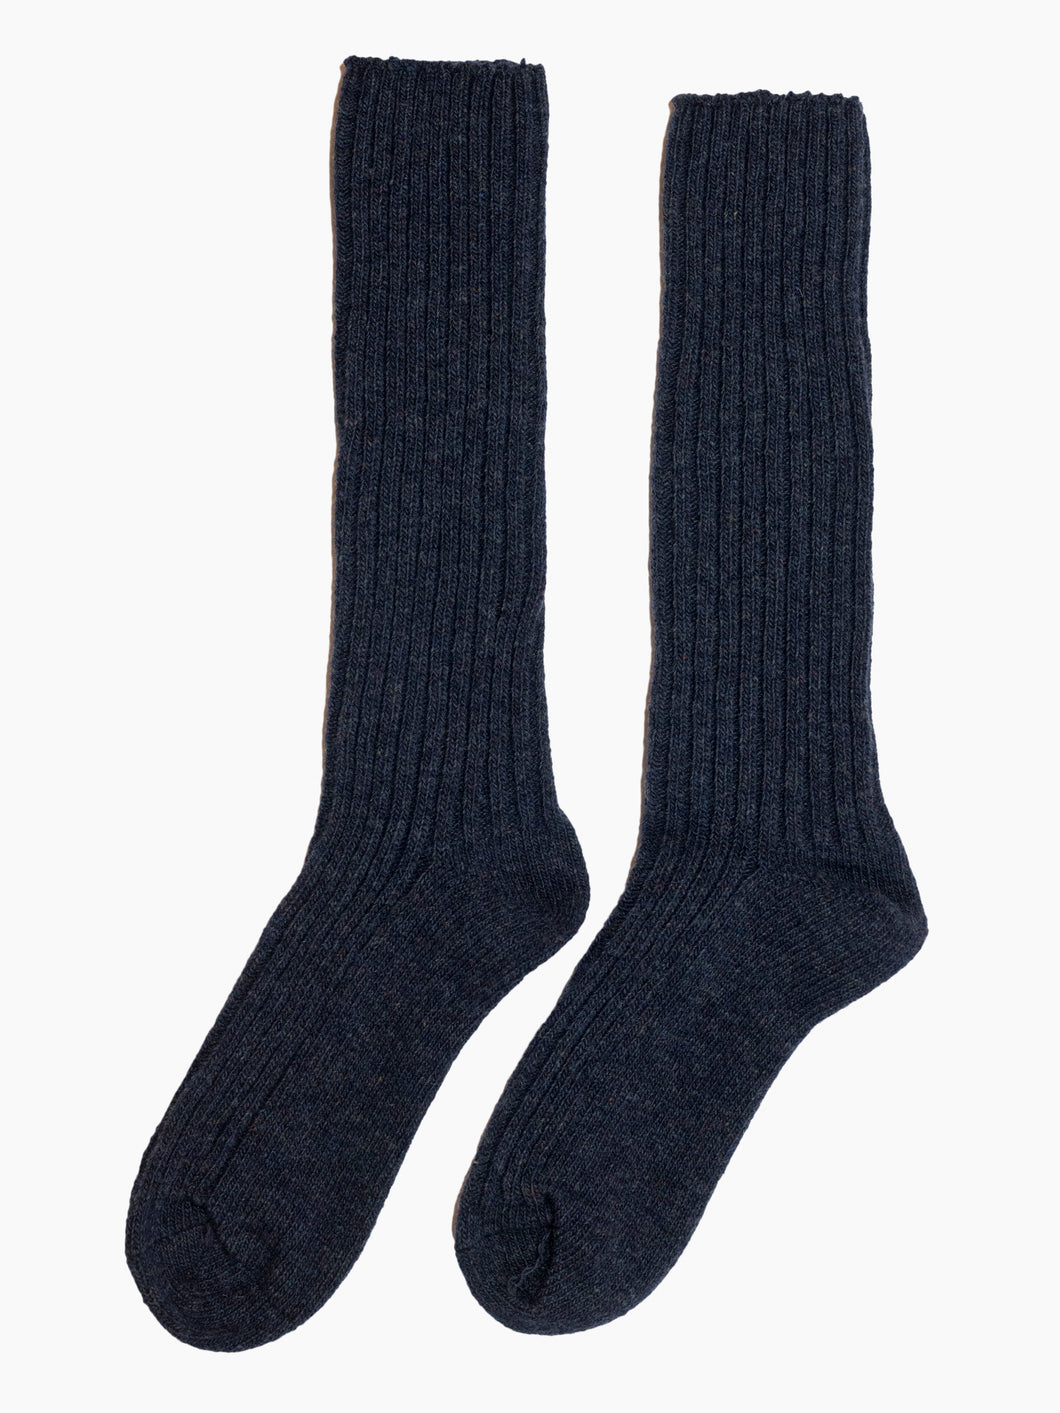 Recycled Wool Winter Socks, Navy